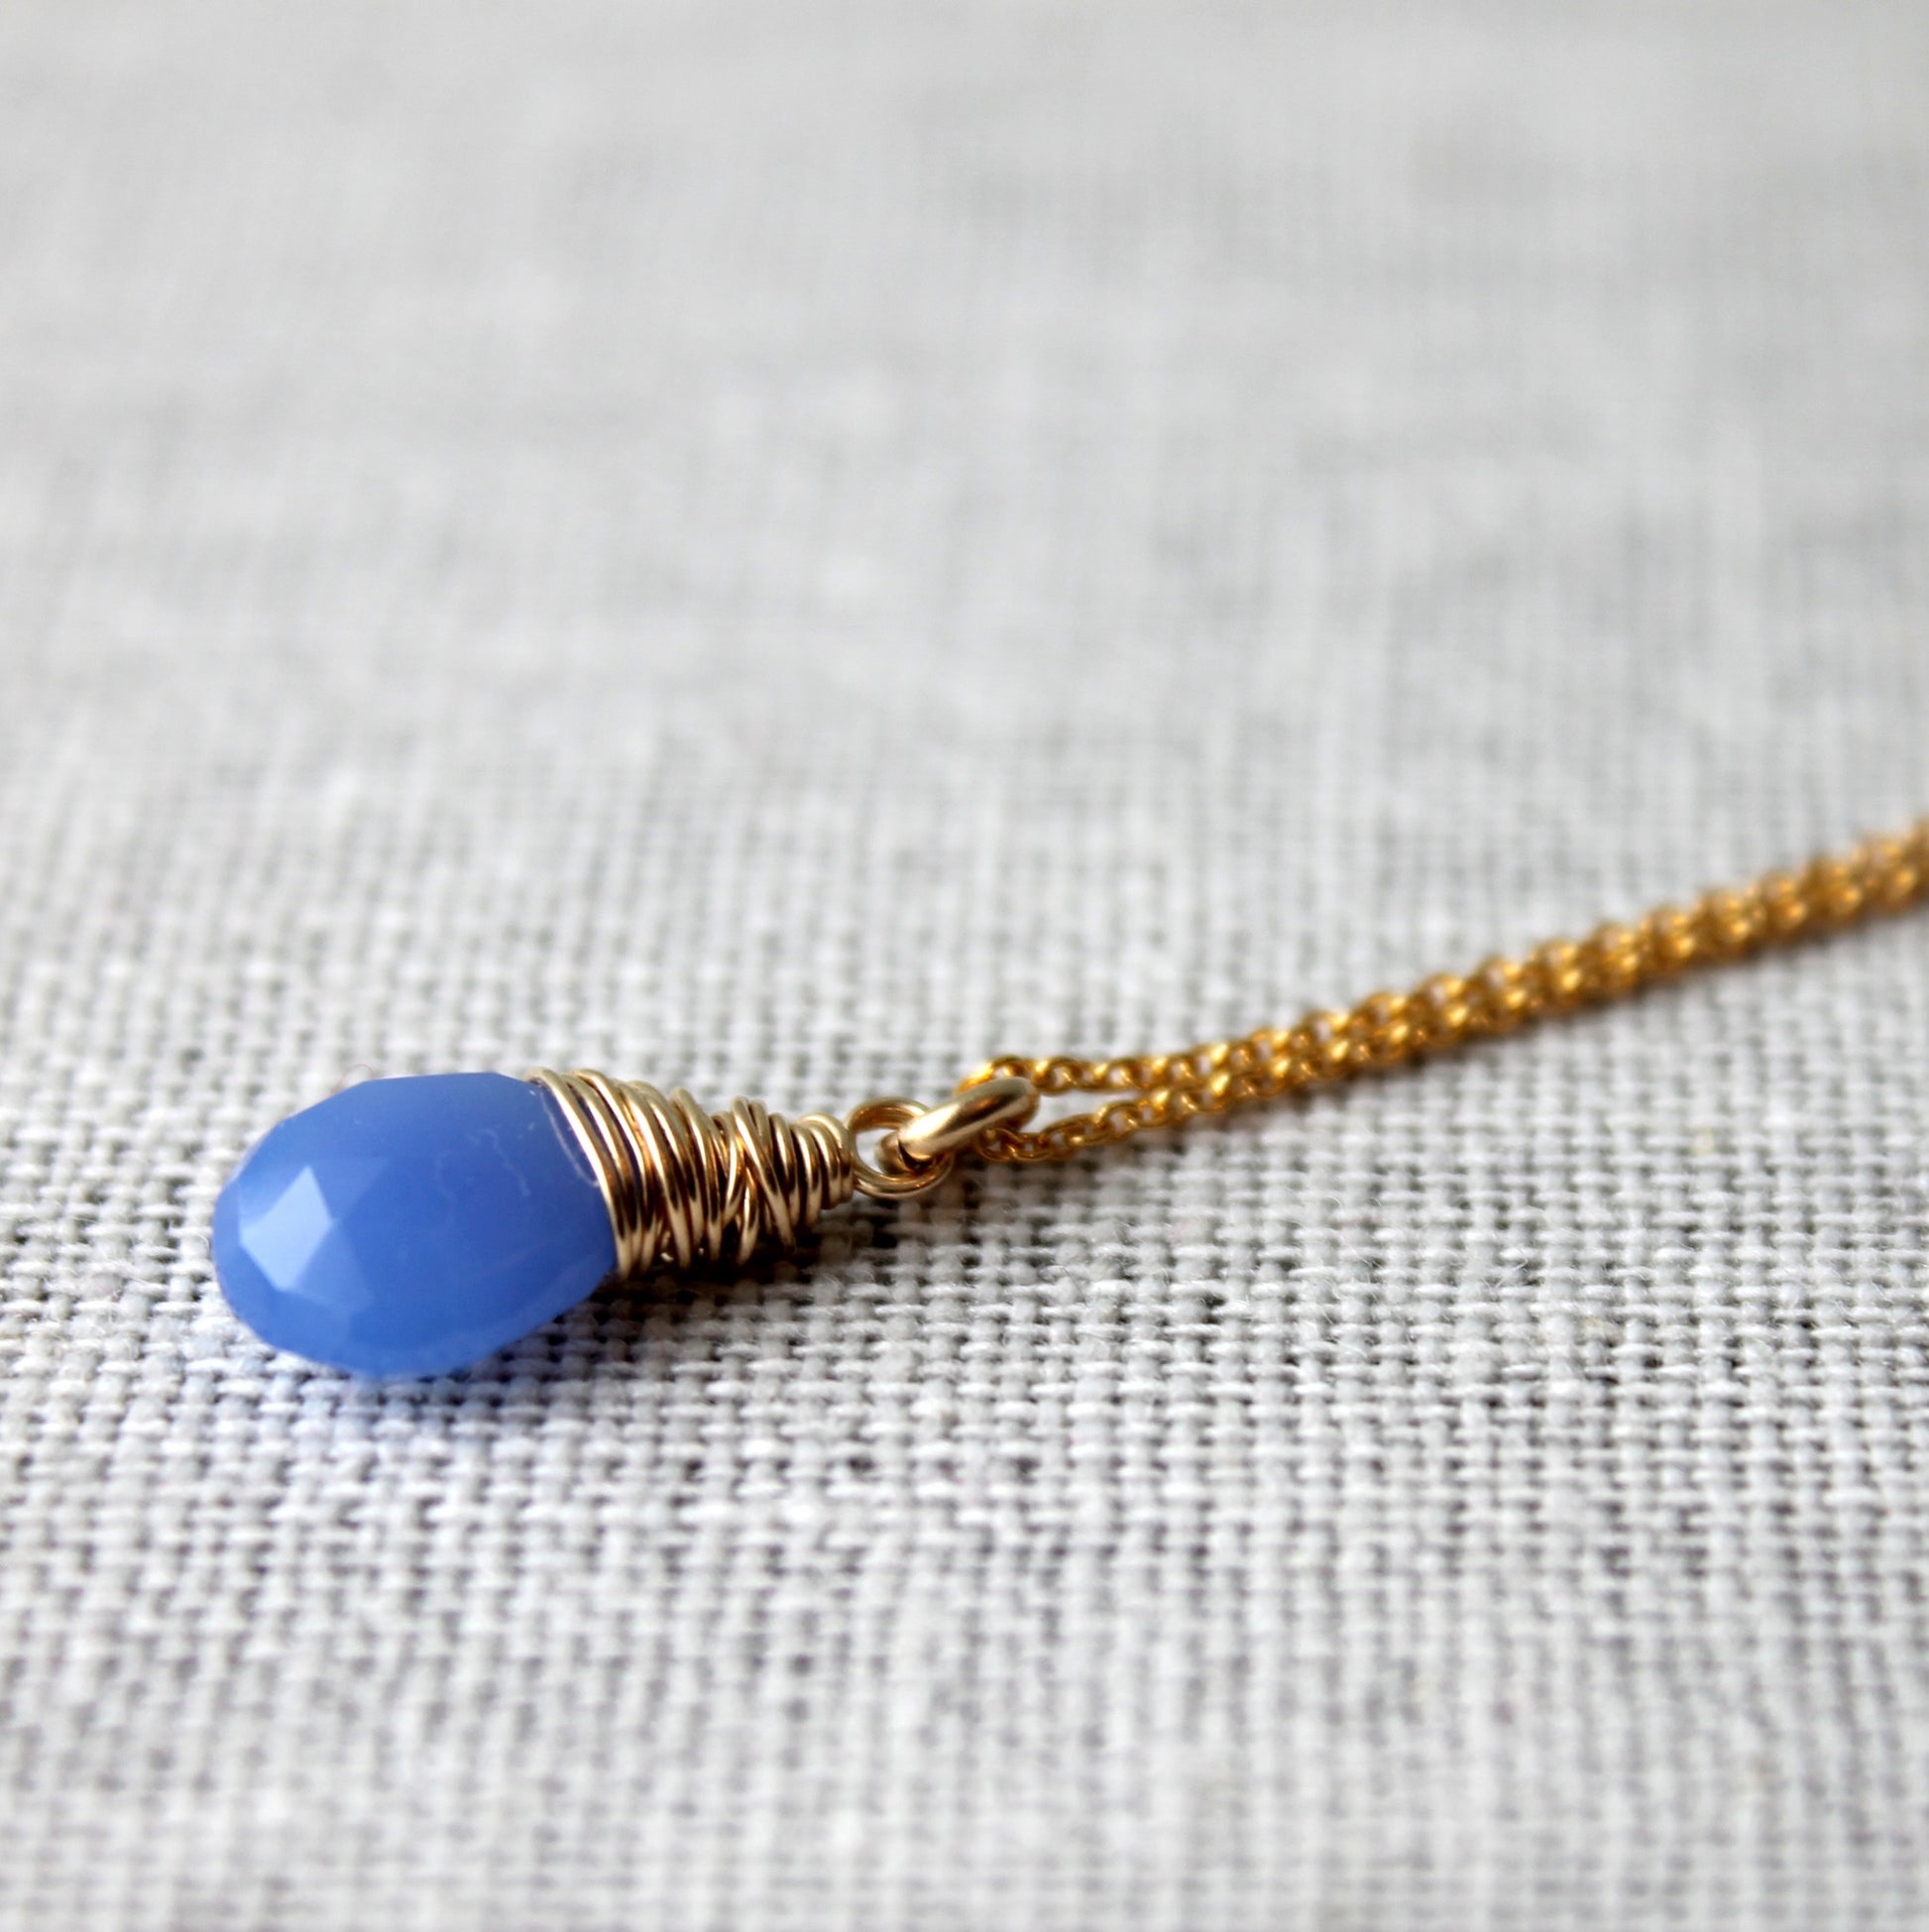 Blue Chalcedony gemstone necklace